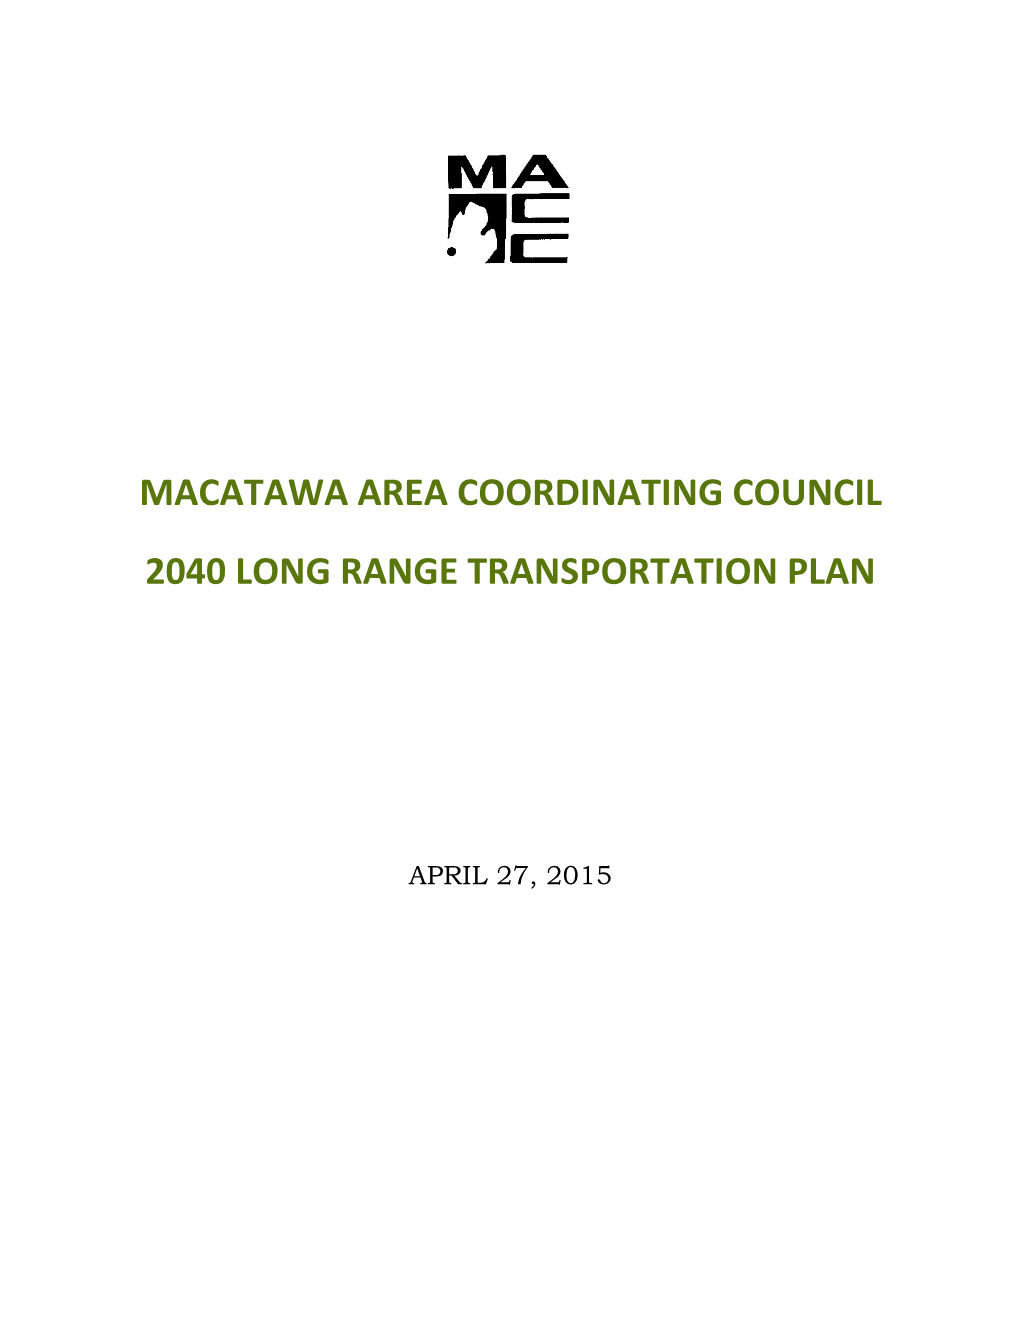 Macatawa Area Coordinating Council 2040 Long Range Transportation Plan